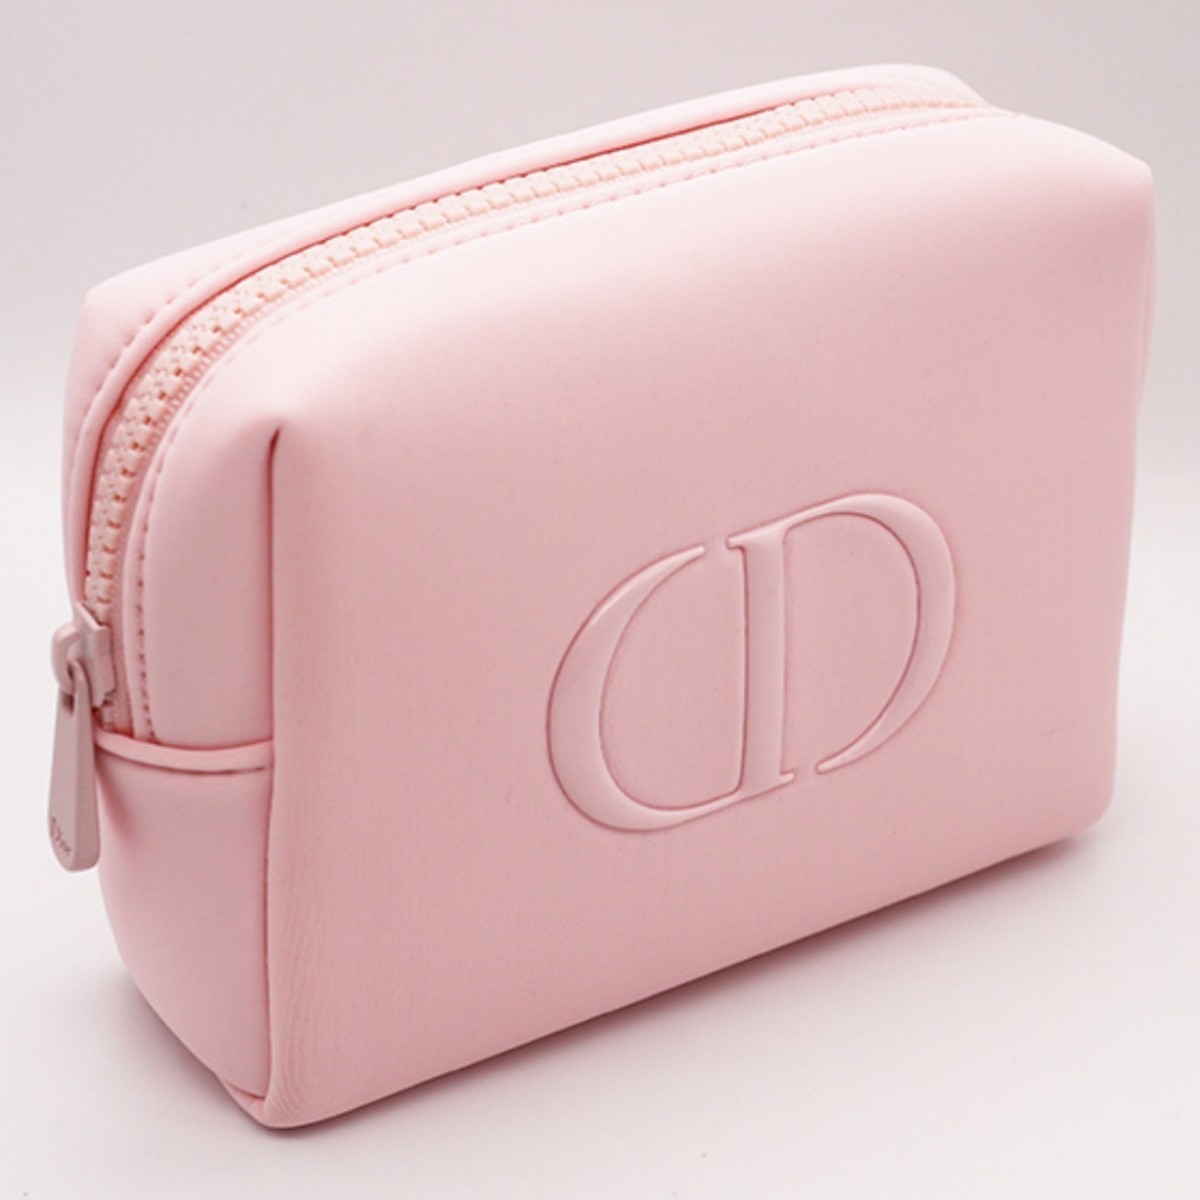 【Dior】 ディオール カプチュール ユース オファー ポーチ付き / トライアルセット / ミニサイズ (外箱なし)